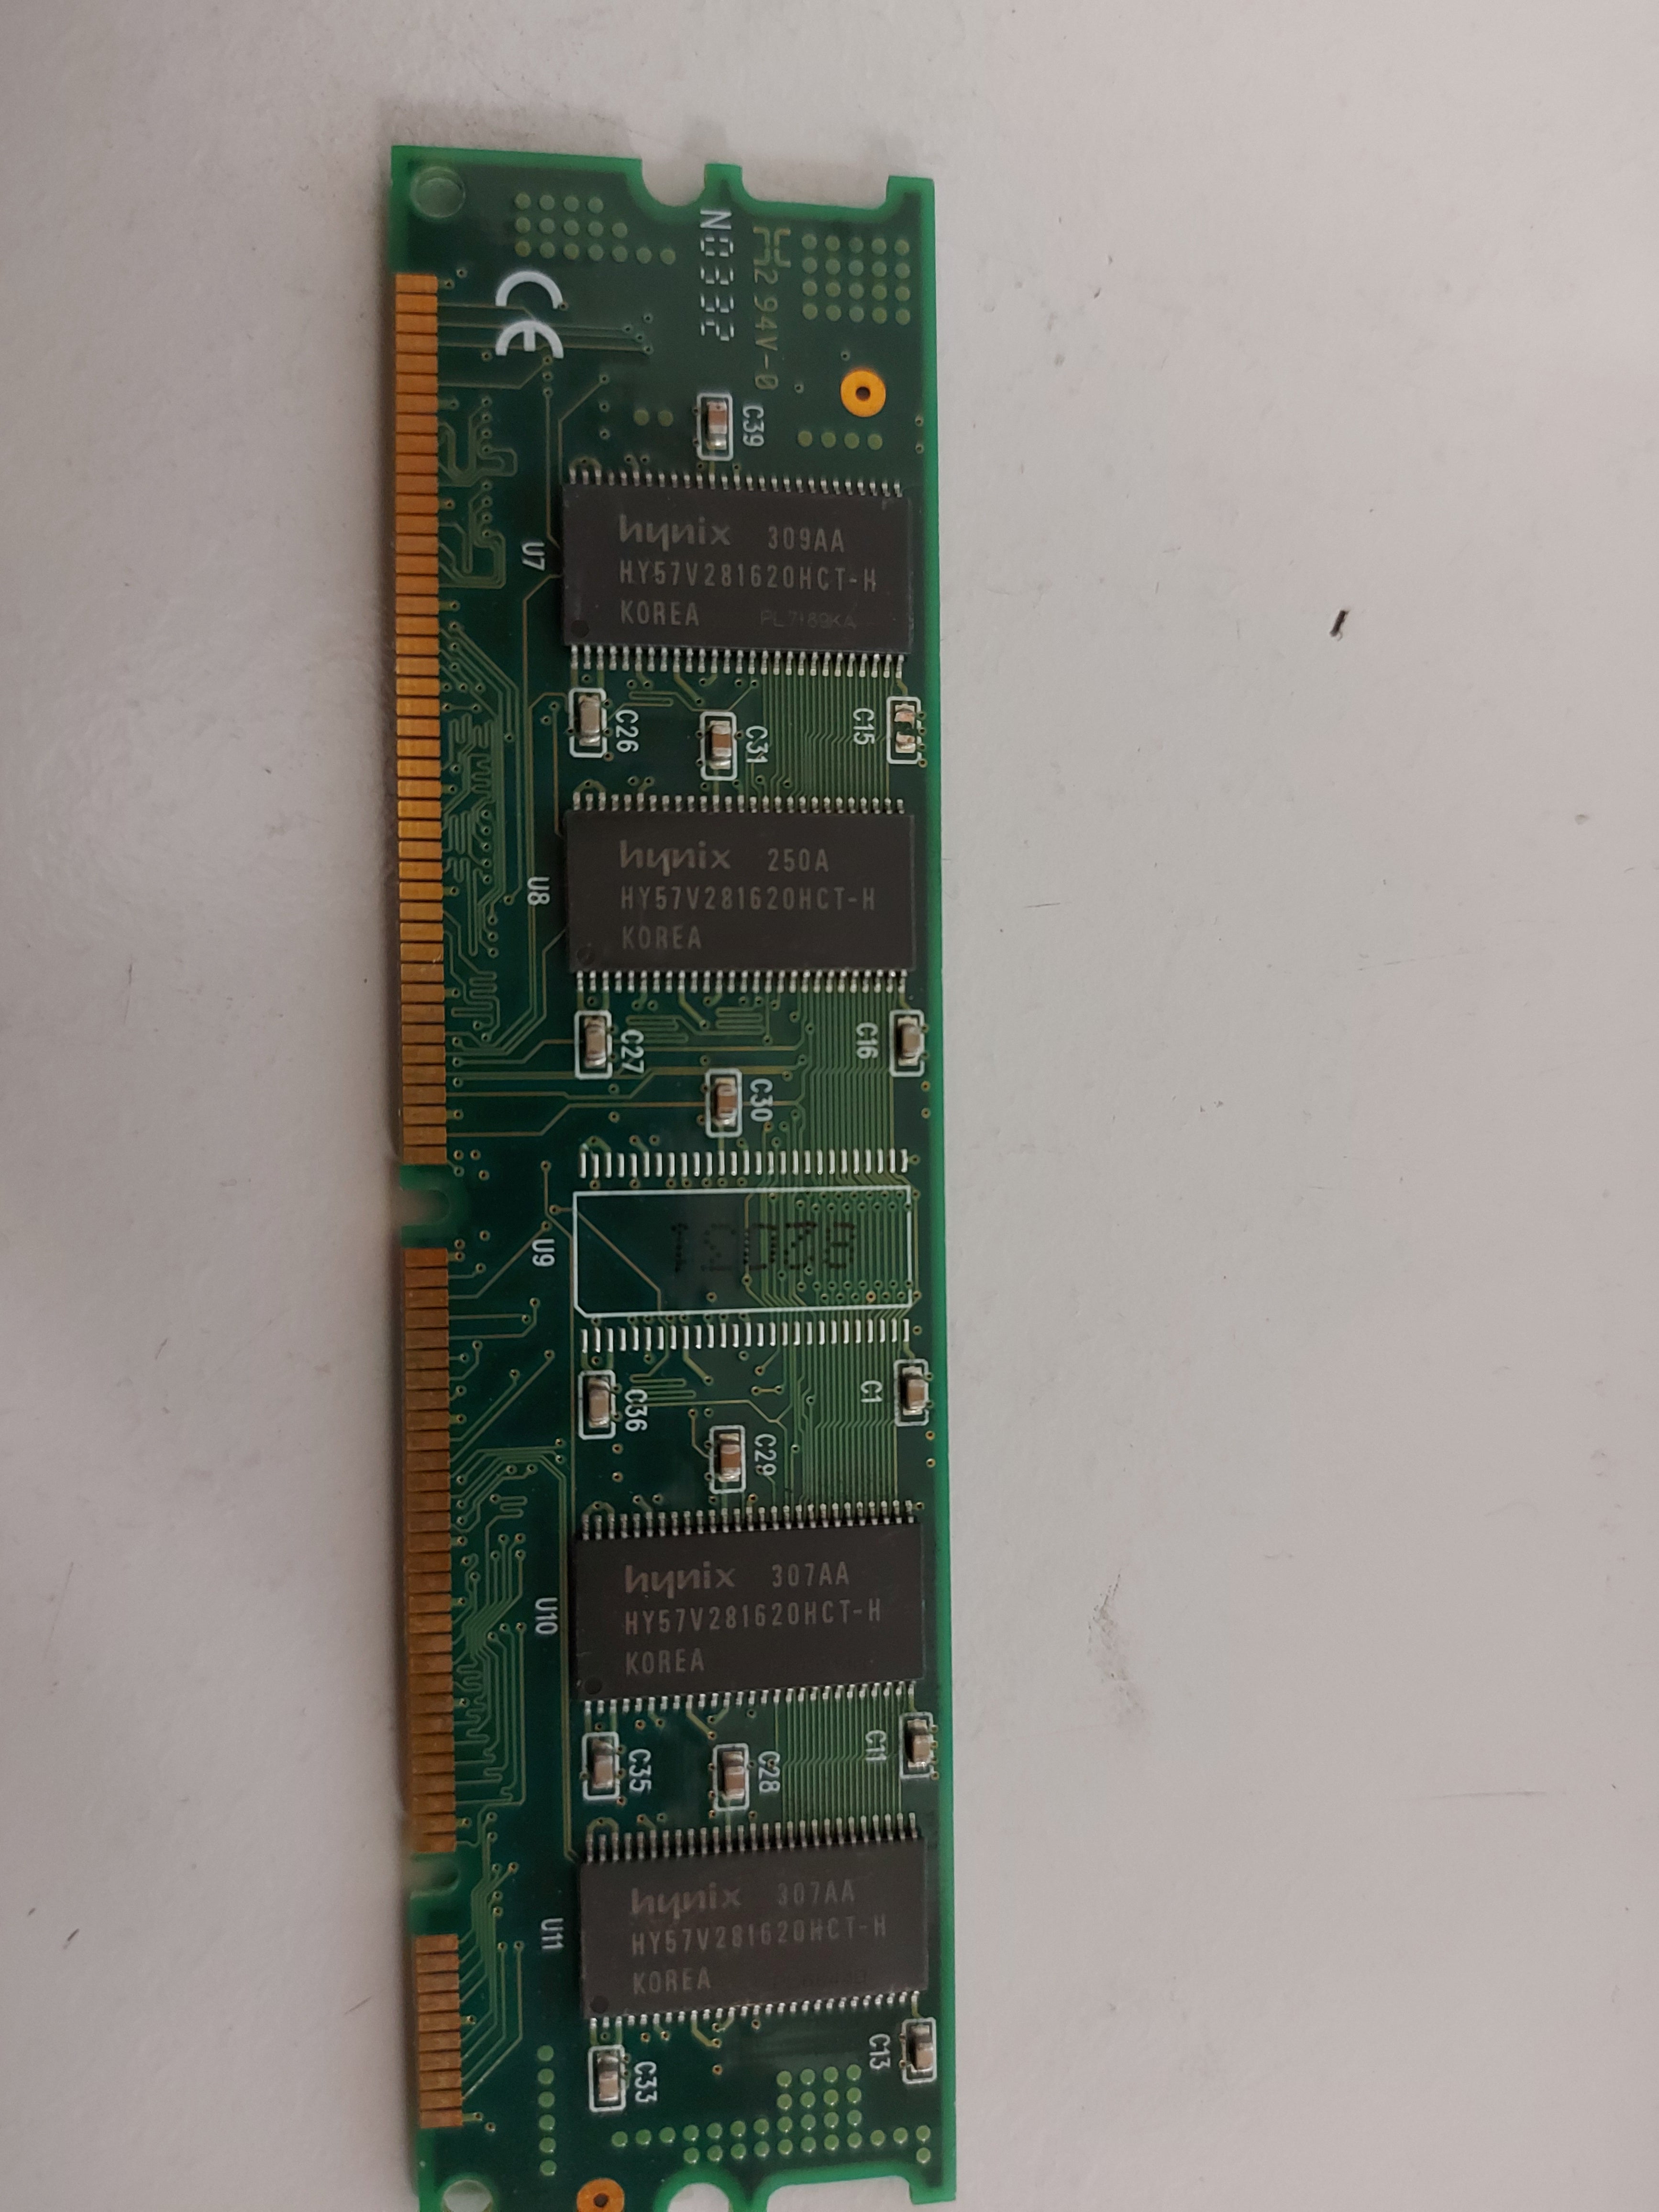 Kingston 128MB PC133 DDR SDRAM DIMM Memory Module KT733W14692 9992364-003